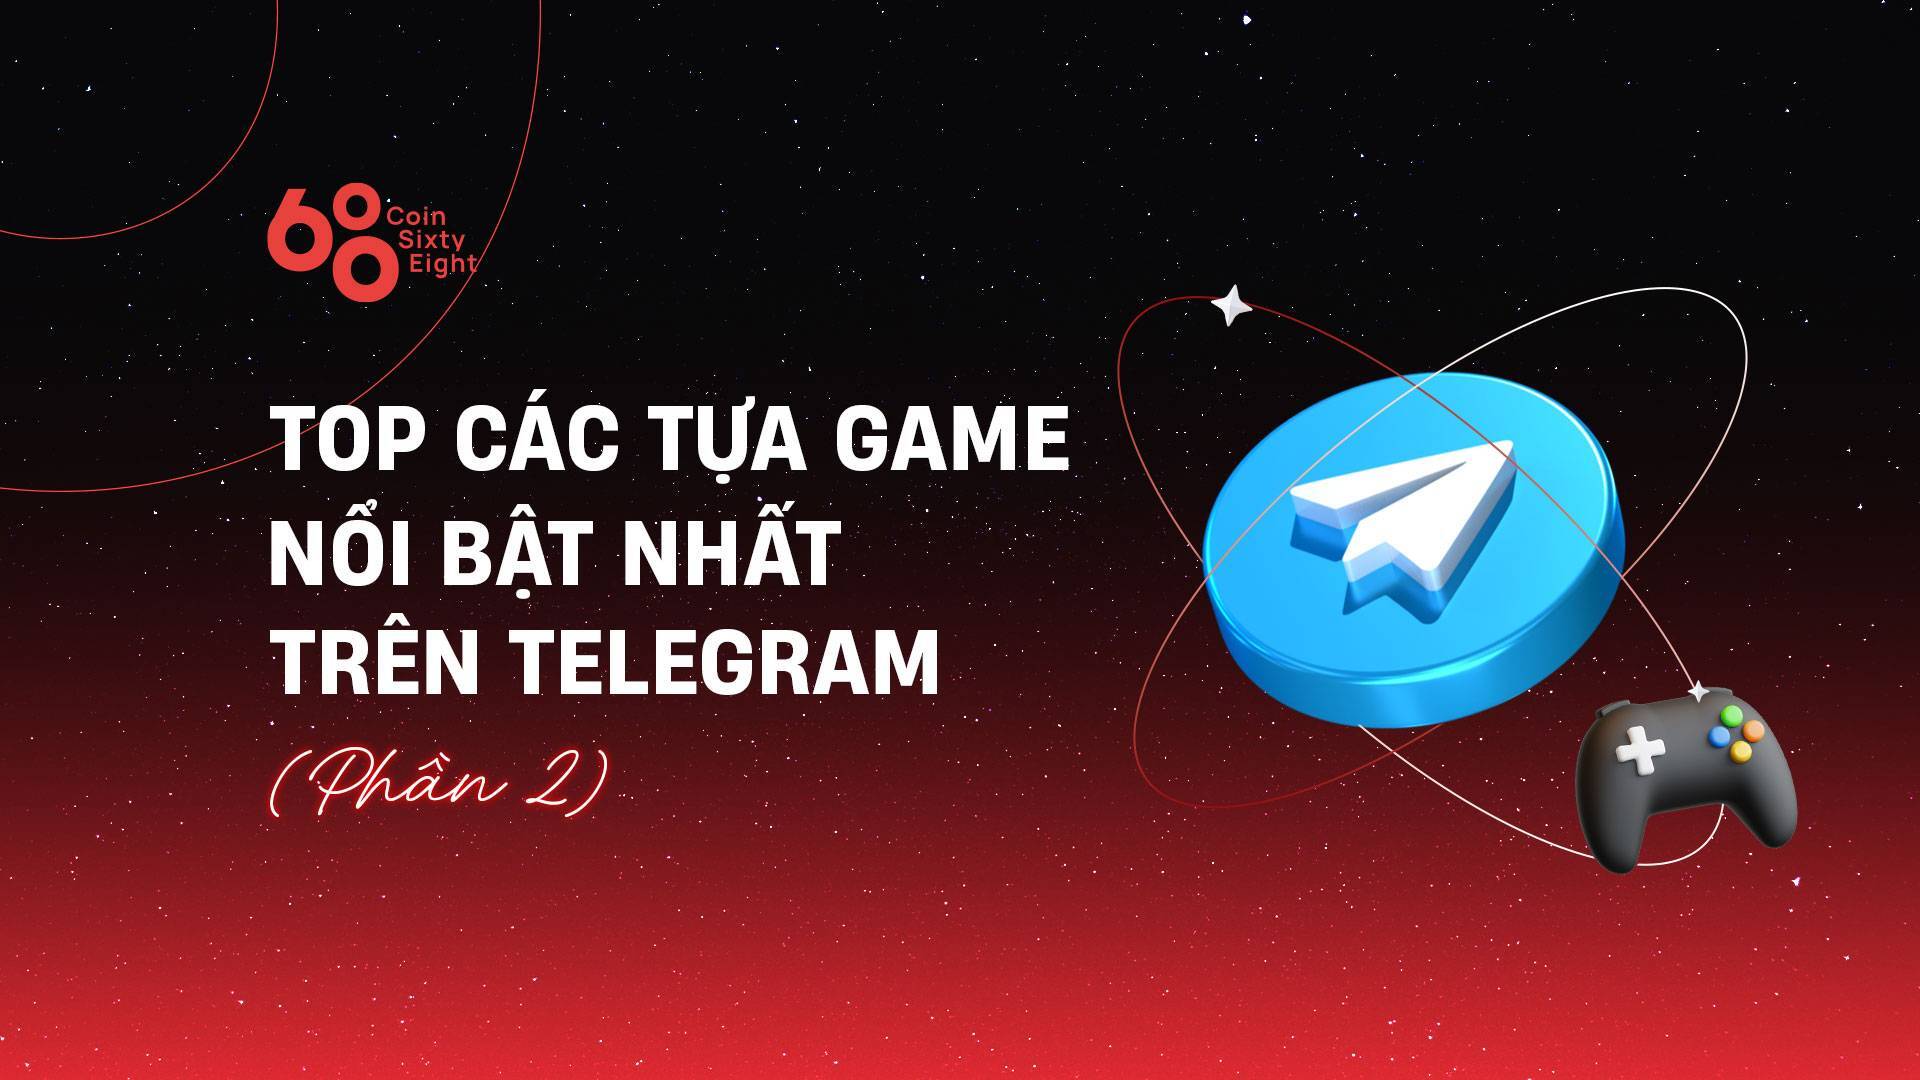 Top Các Tựa Game Nổi Bật Nhất Trên Telegram phần 2